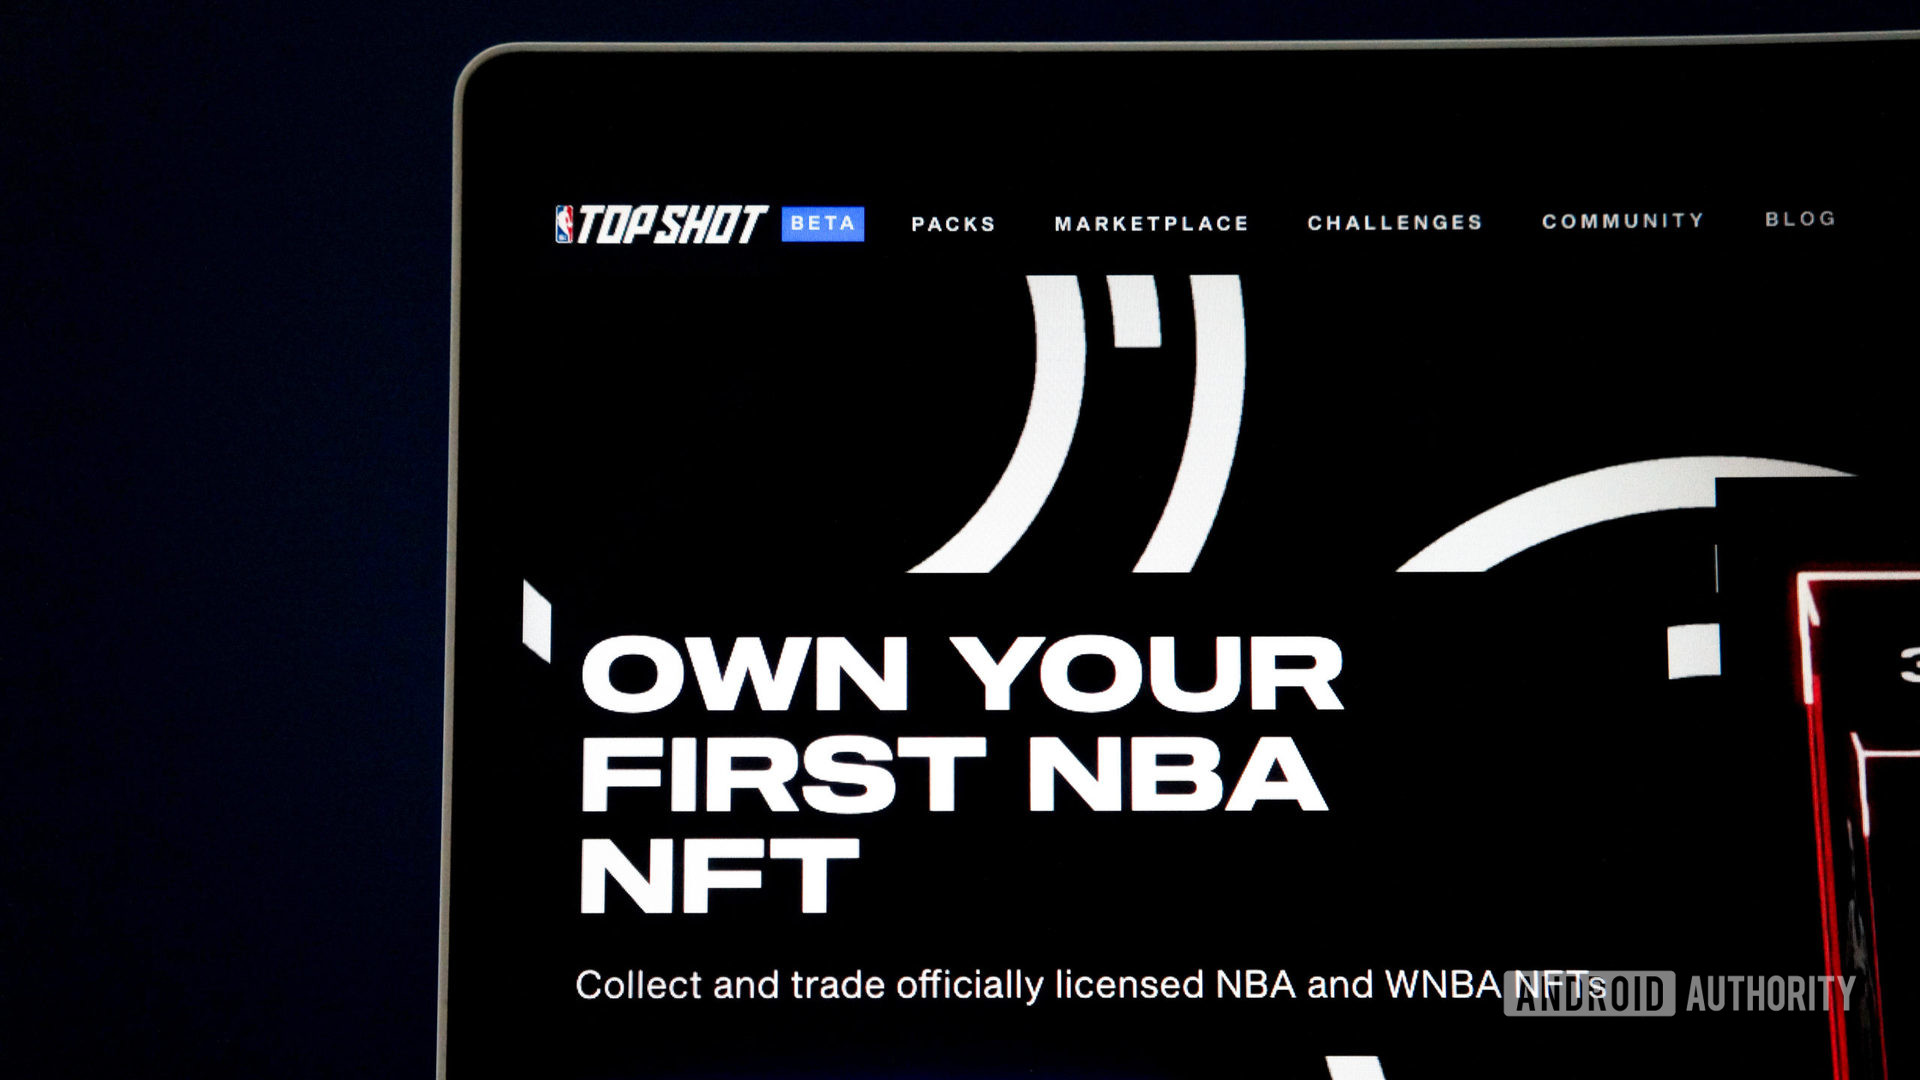 NBA's top shot nft website